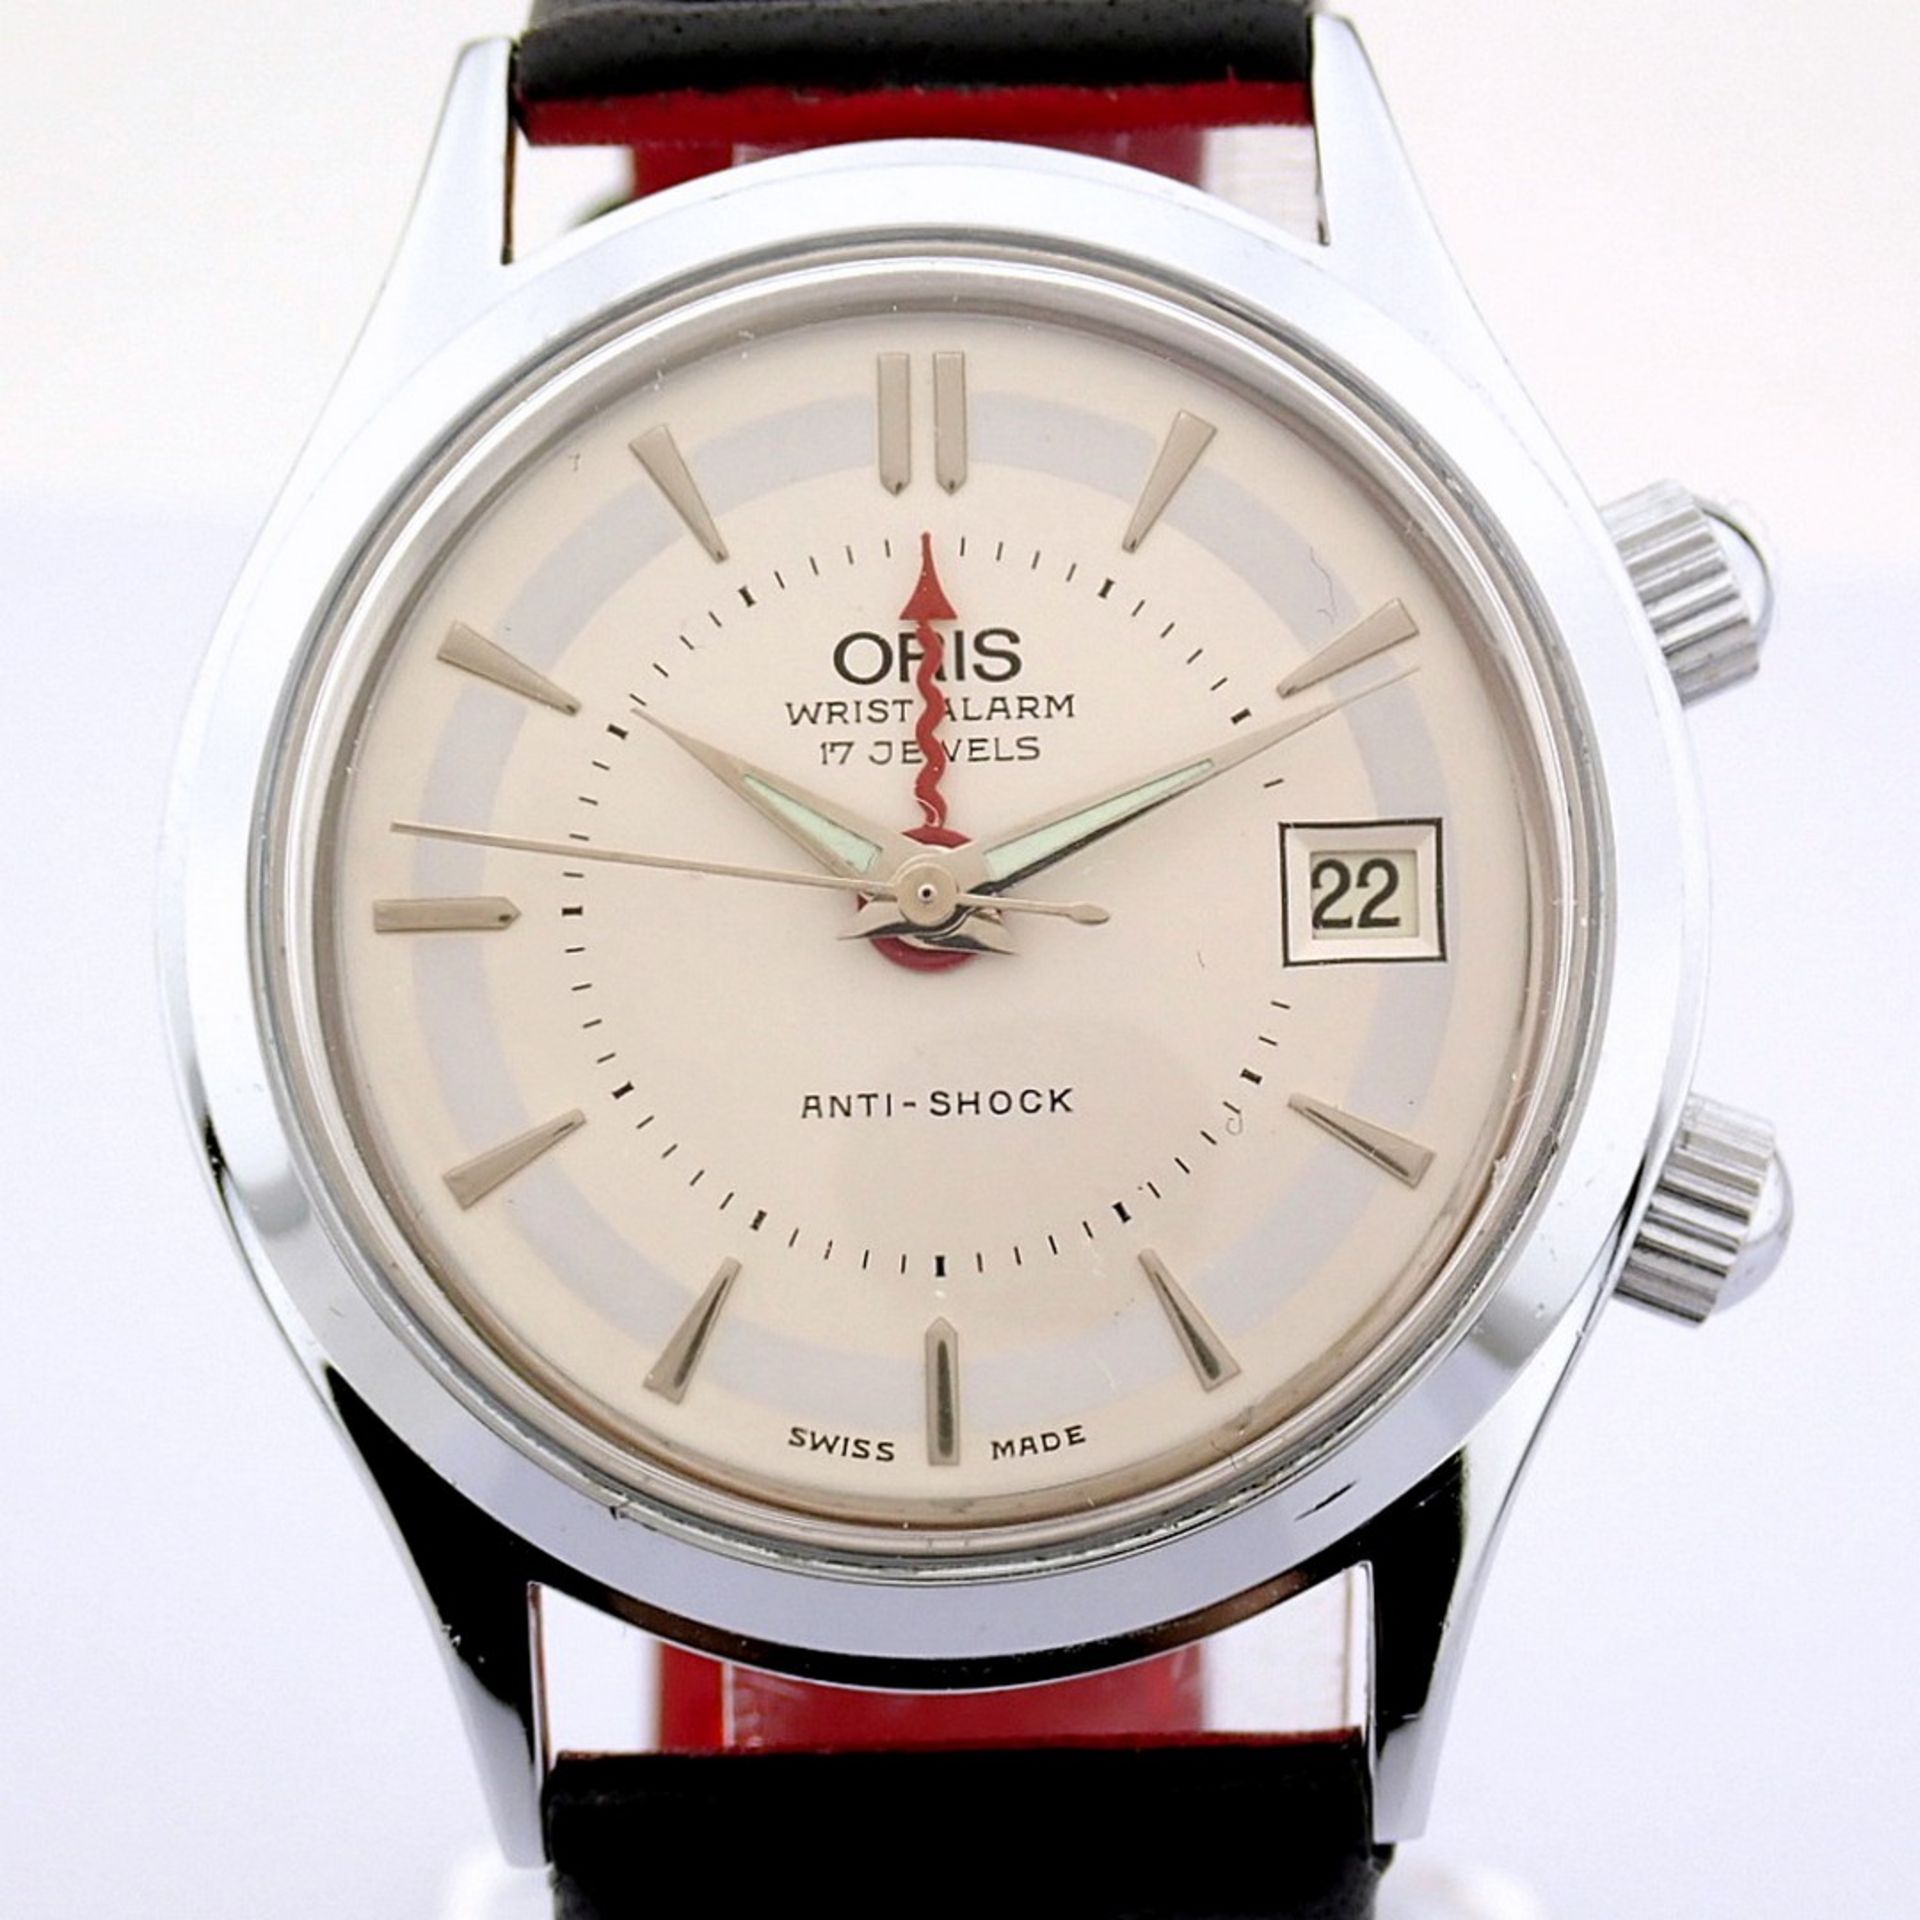 Oris / Wirstalarm 17 Jewels Anti-Shock - Gentlemen's Steel Wristwatch - Image 2 of 10